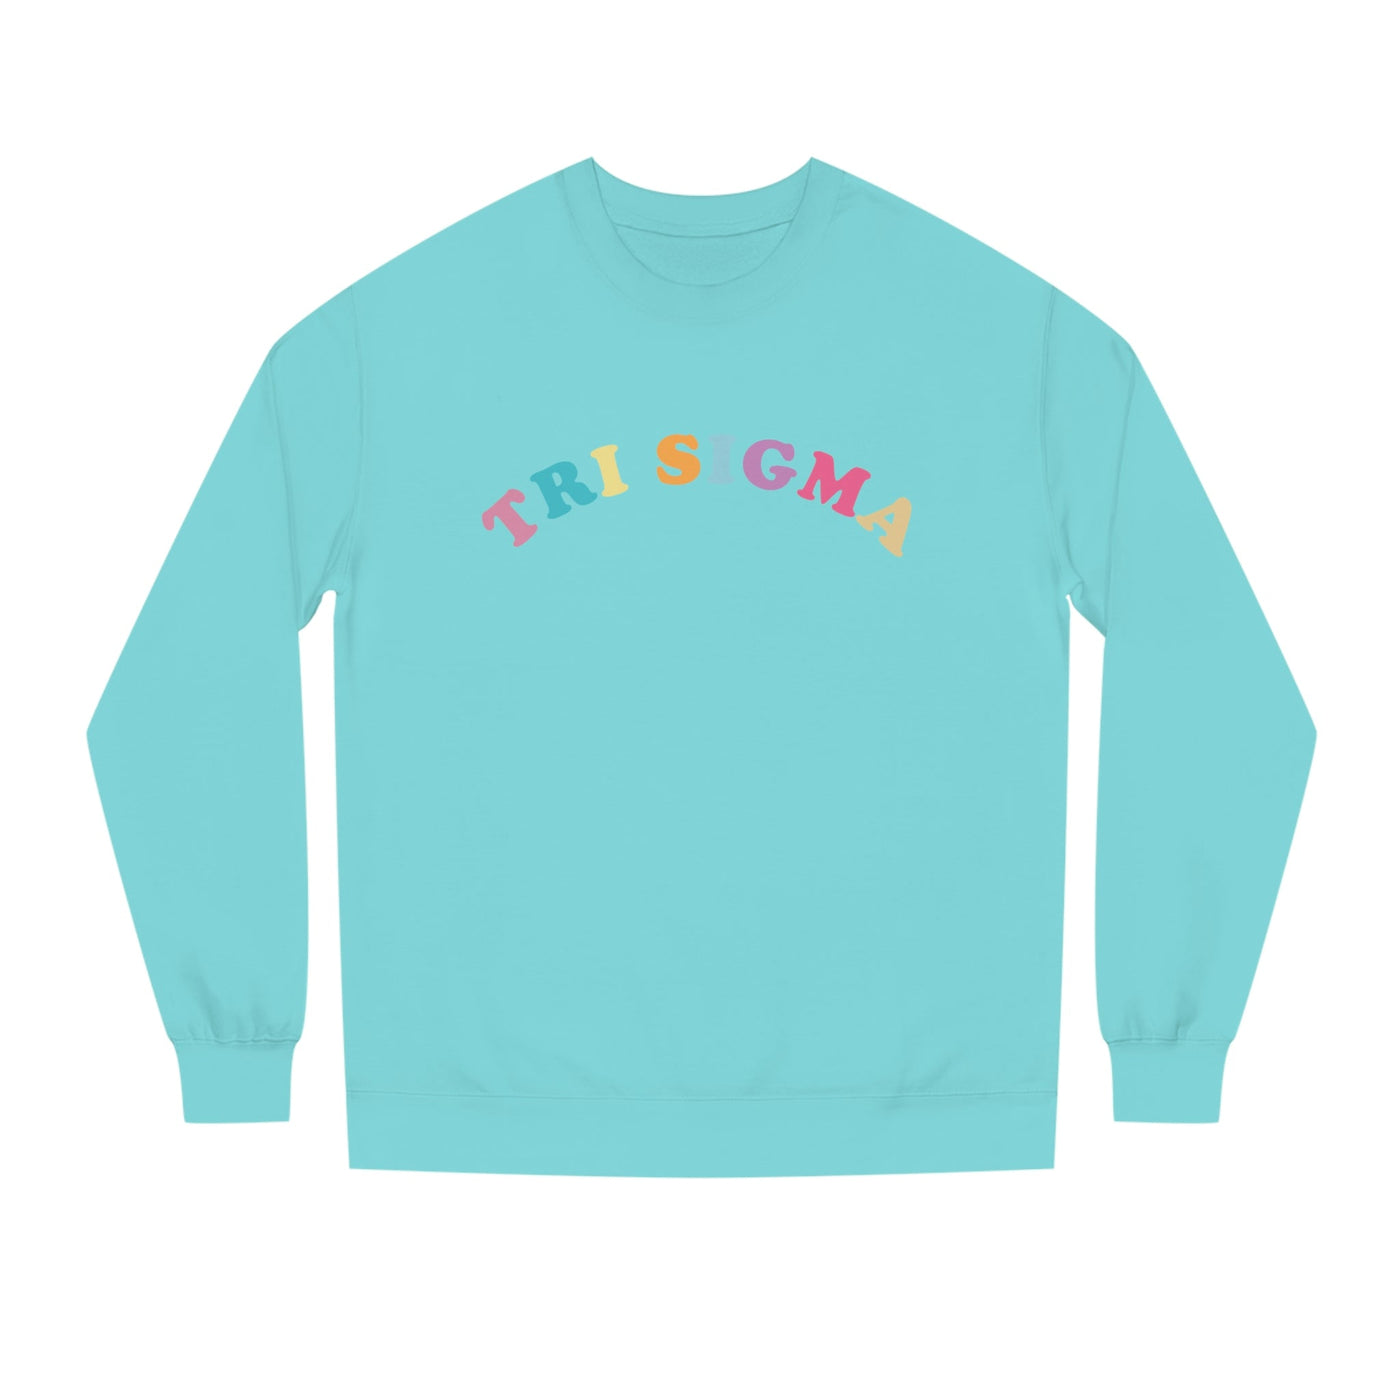 Sigma Sigma Sigma Colorful Text Cute Tri Sigma Sorority Crewneck Sweatshirt